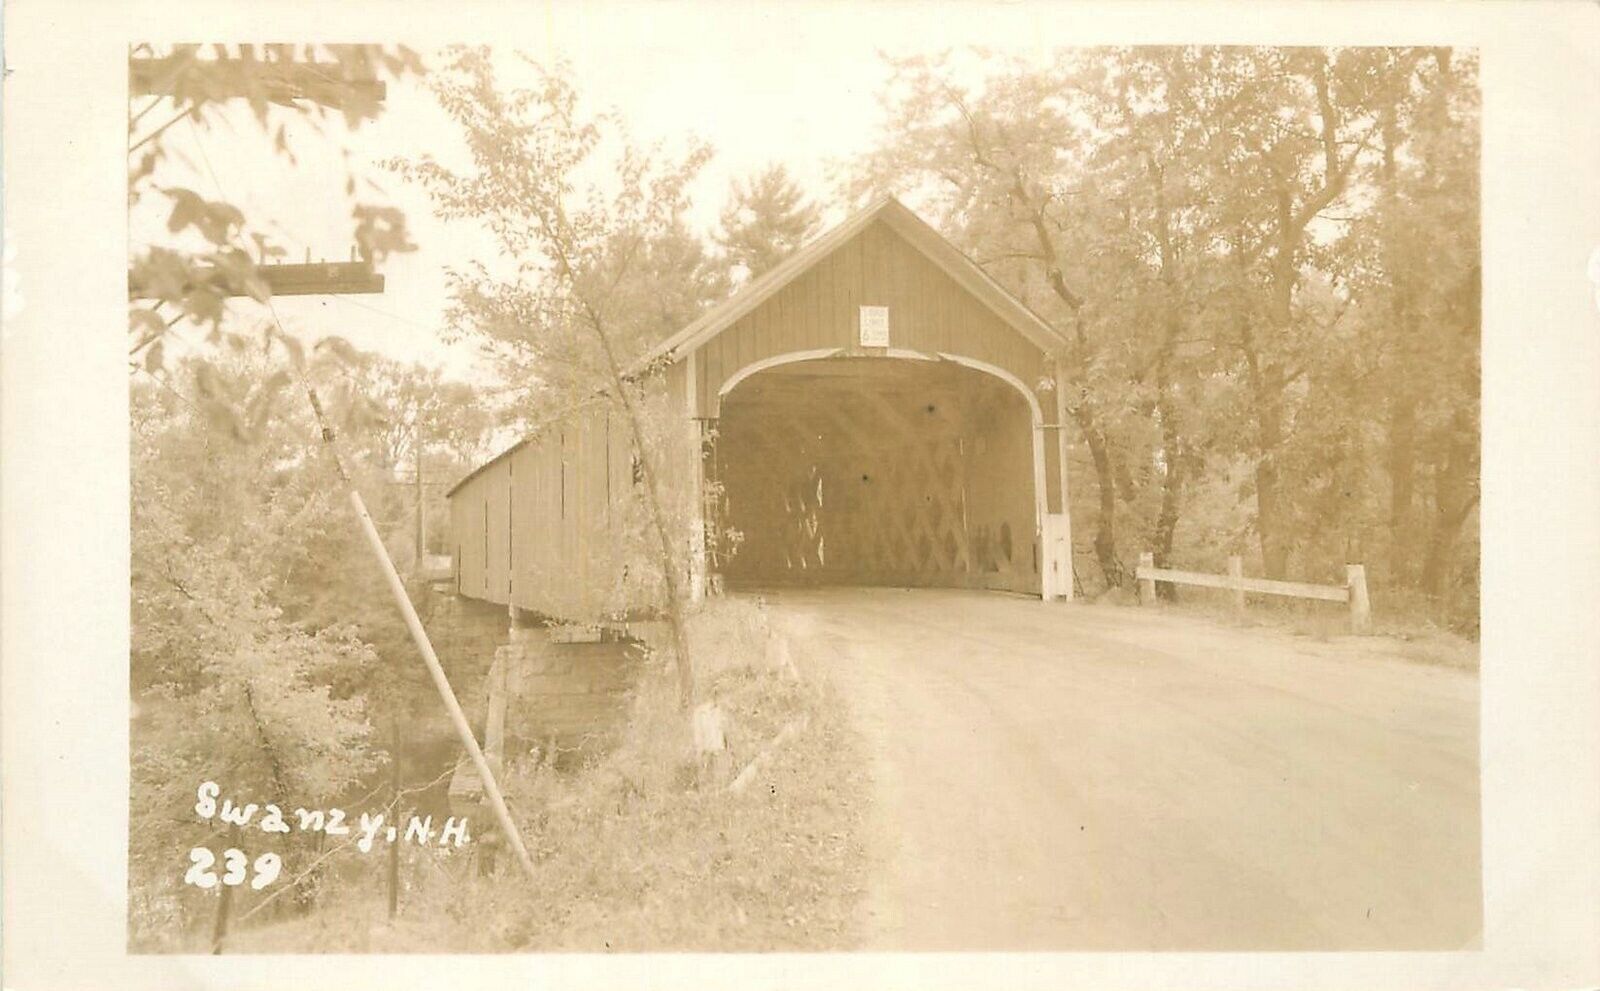 Postcard RPPC New Hampshire Swanzy Covered Bridge 23-5546